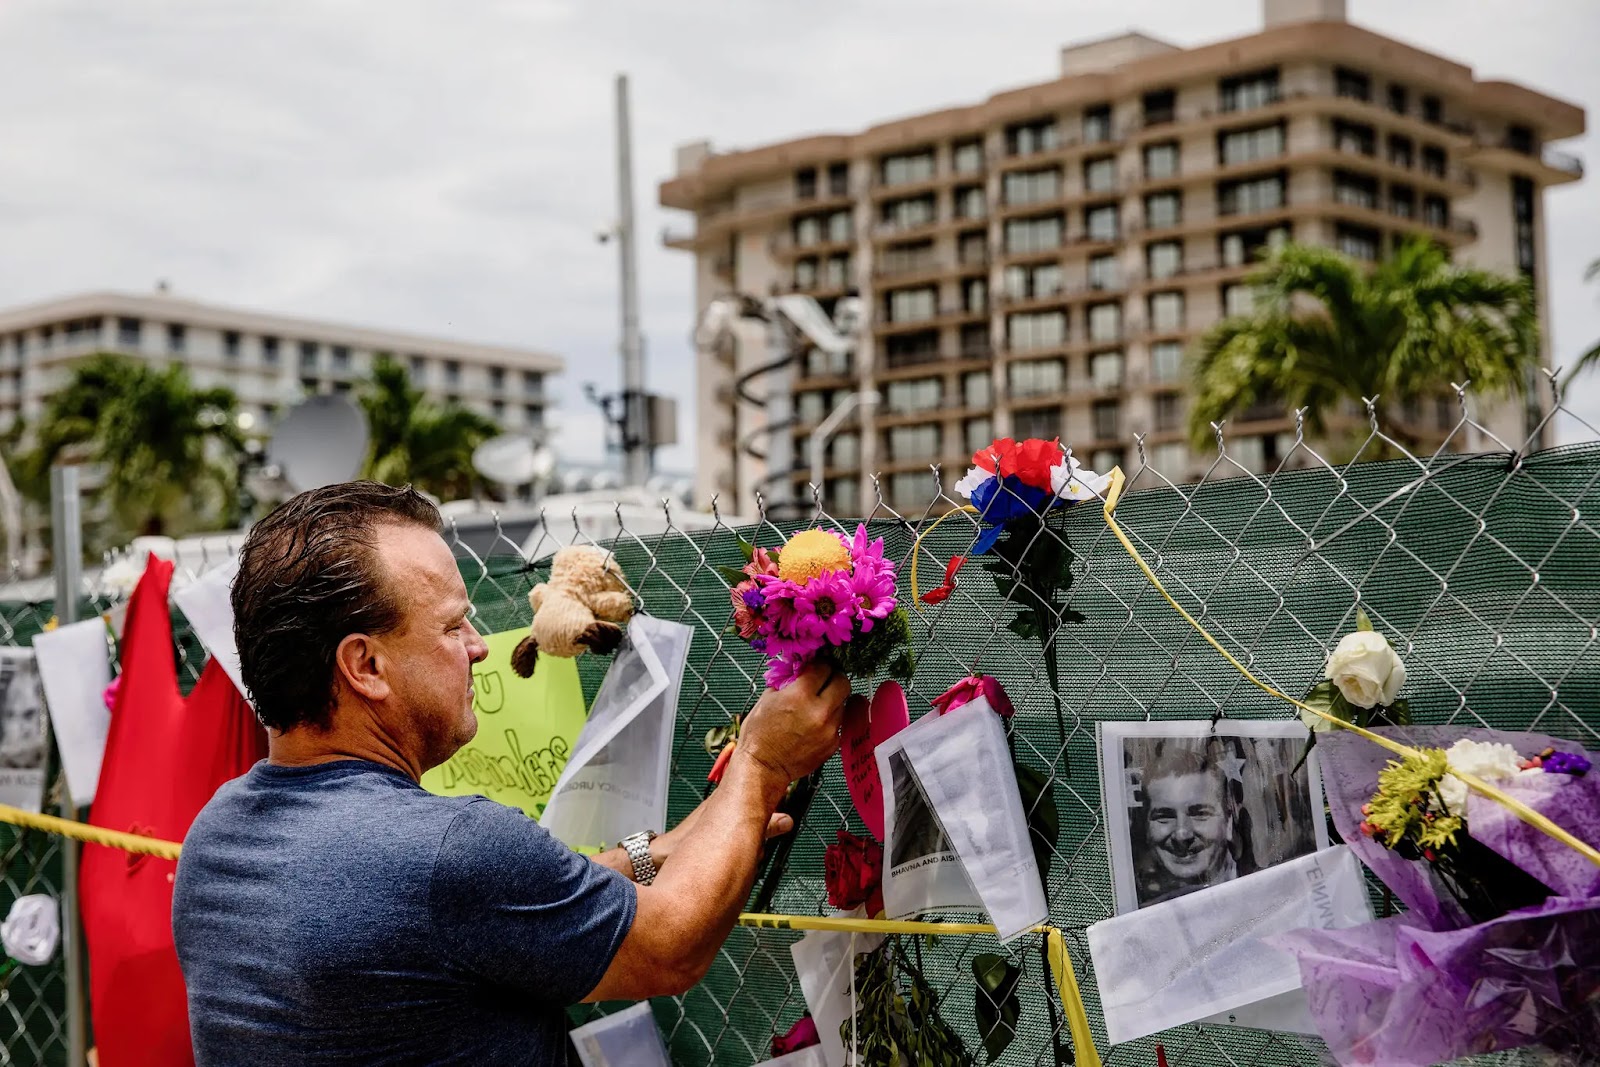 Preceding the Florida Condo Collapse: Unraveling Years of Turmoil